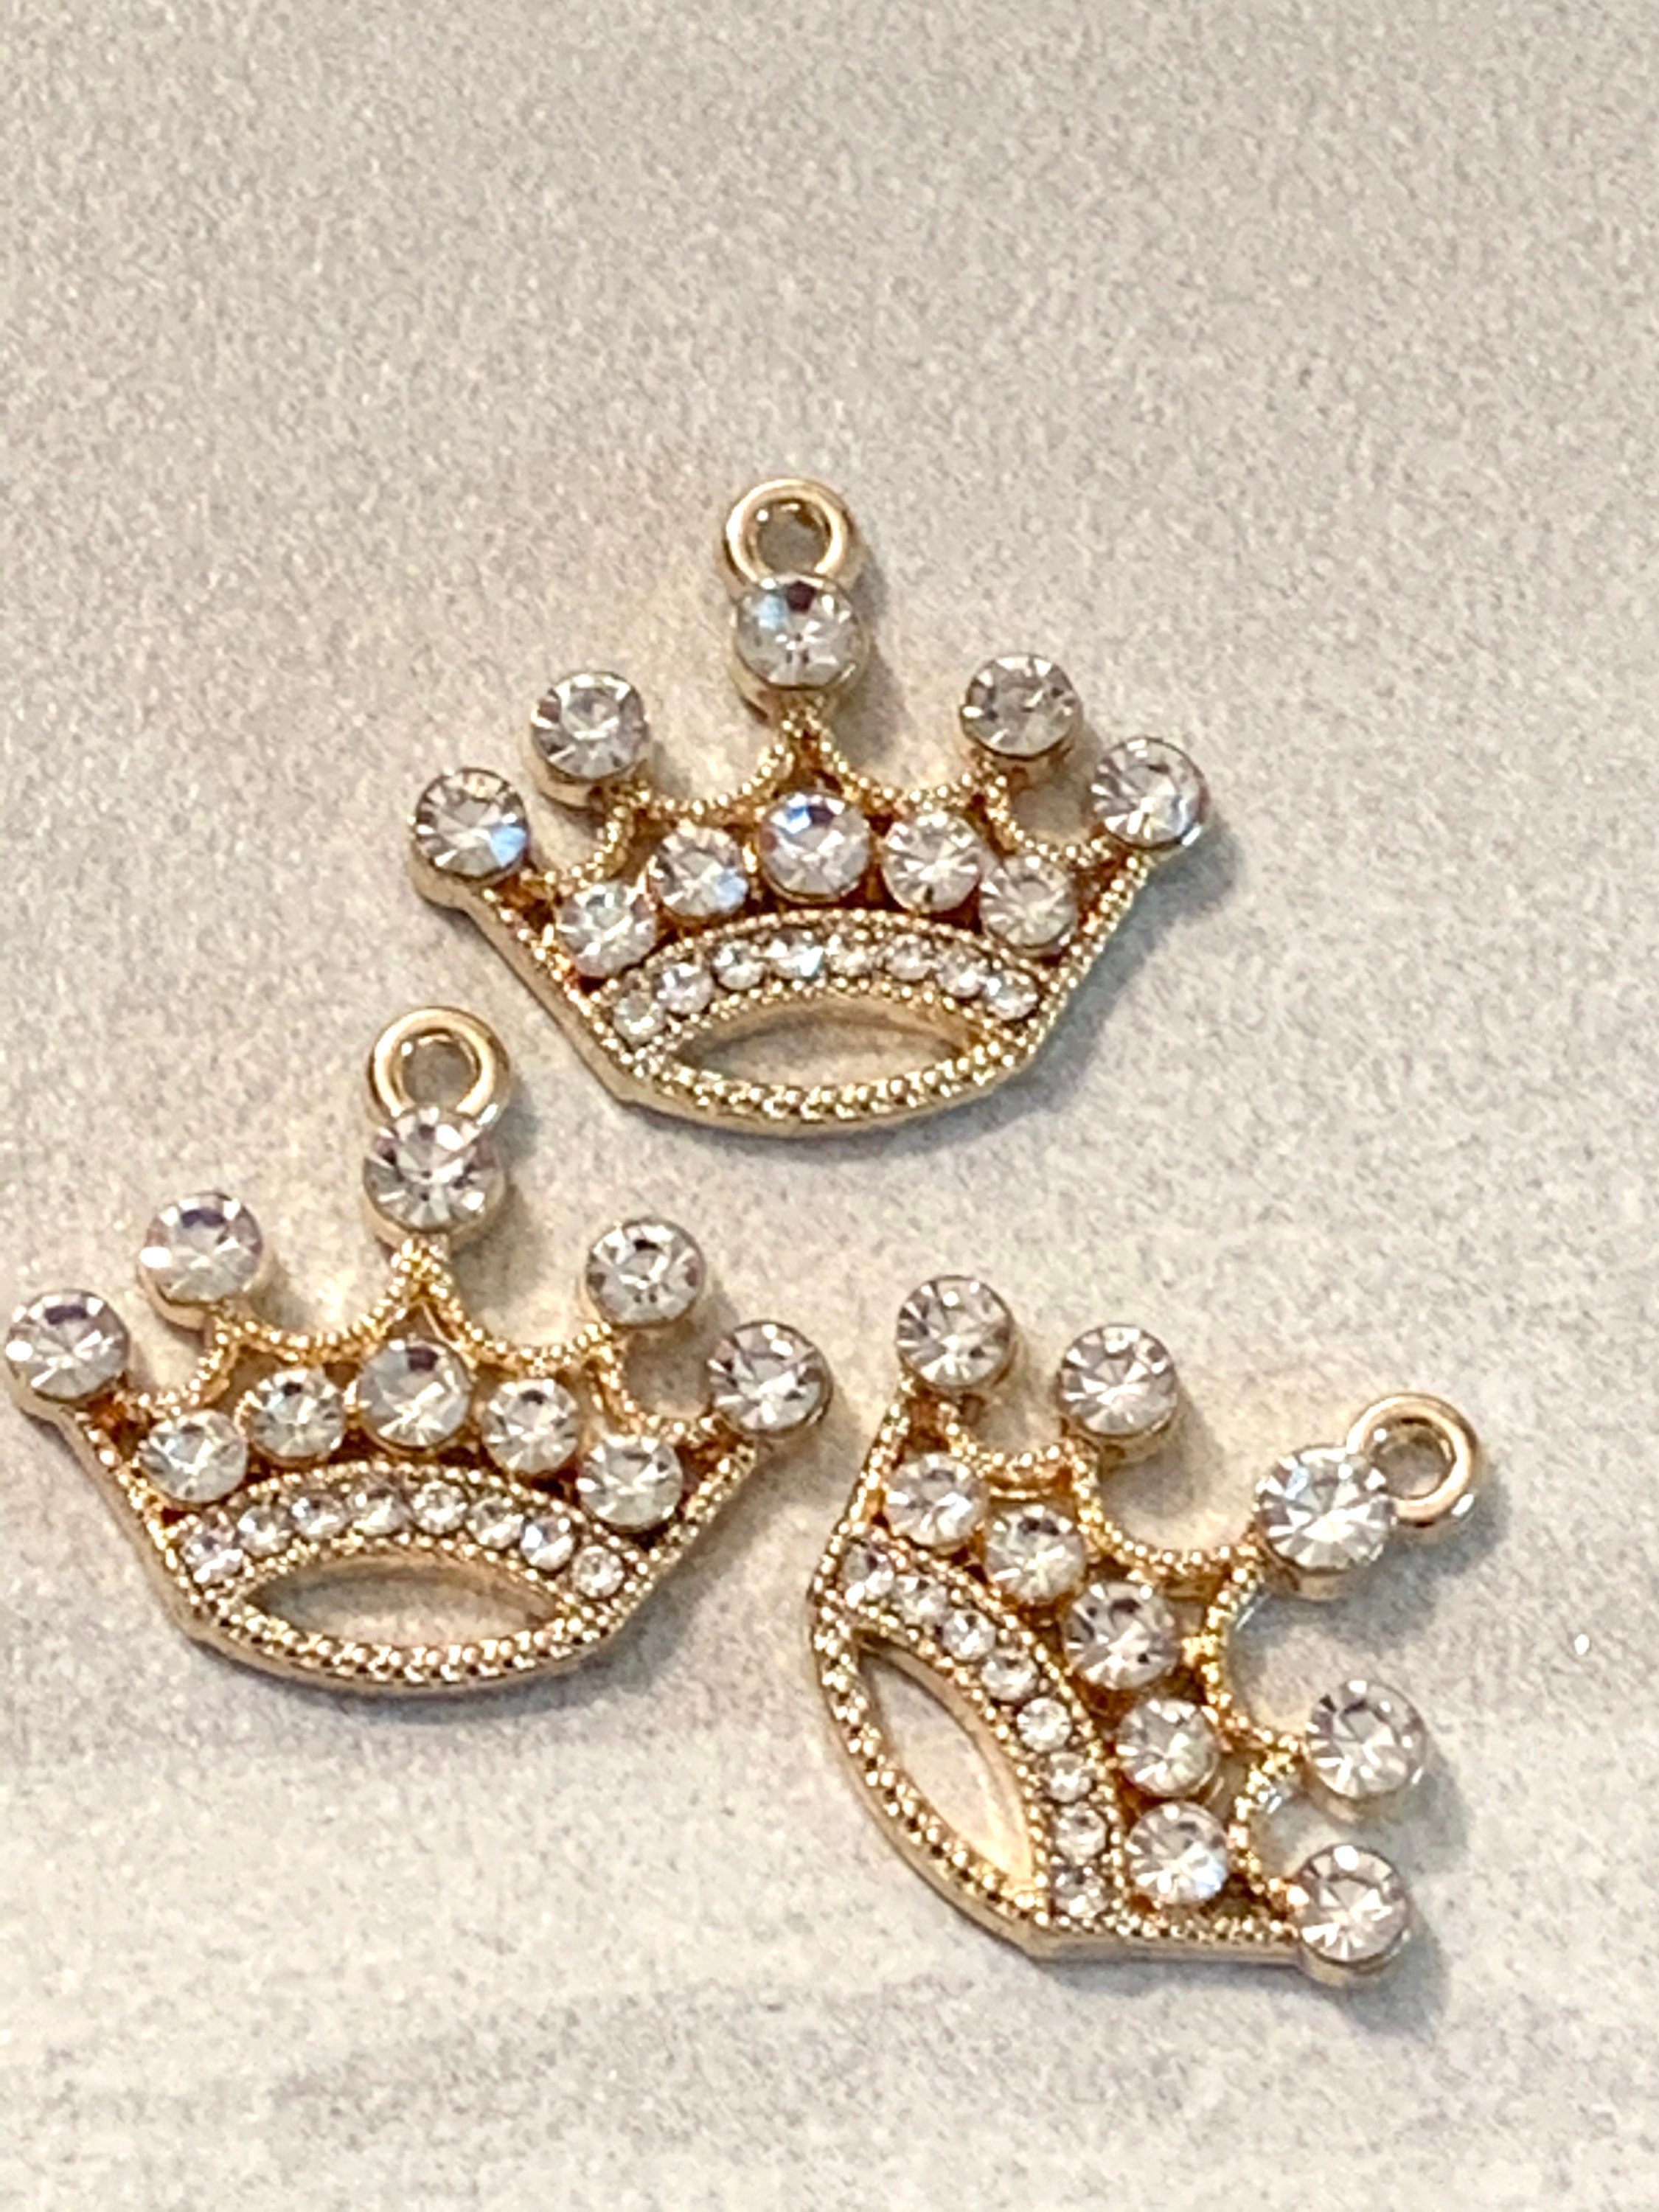 SUNNYCLUE 1 Box 100pcs Crown Charms in Bulk King Charms King Crown Charms for Jewelry Making Crown Cabochons Flatback Crown Charms